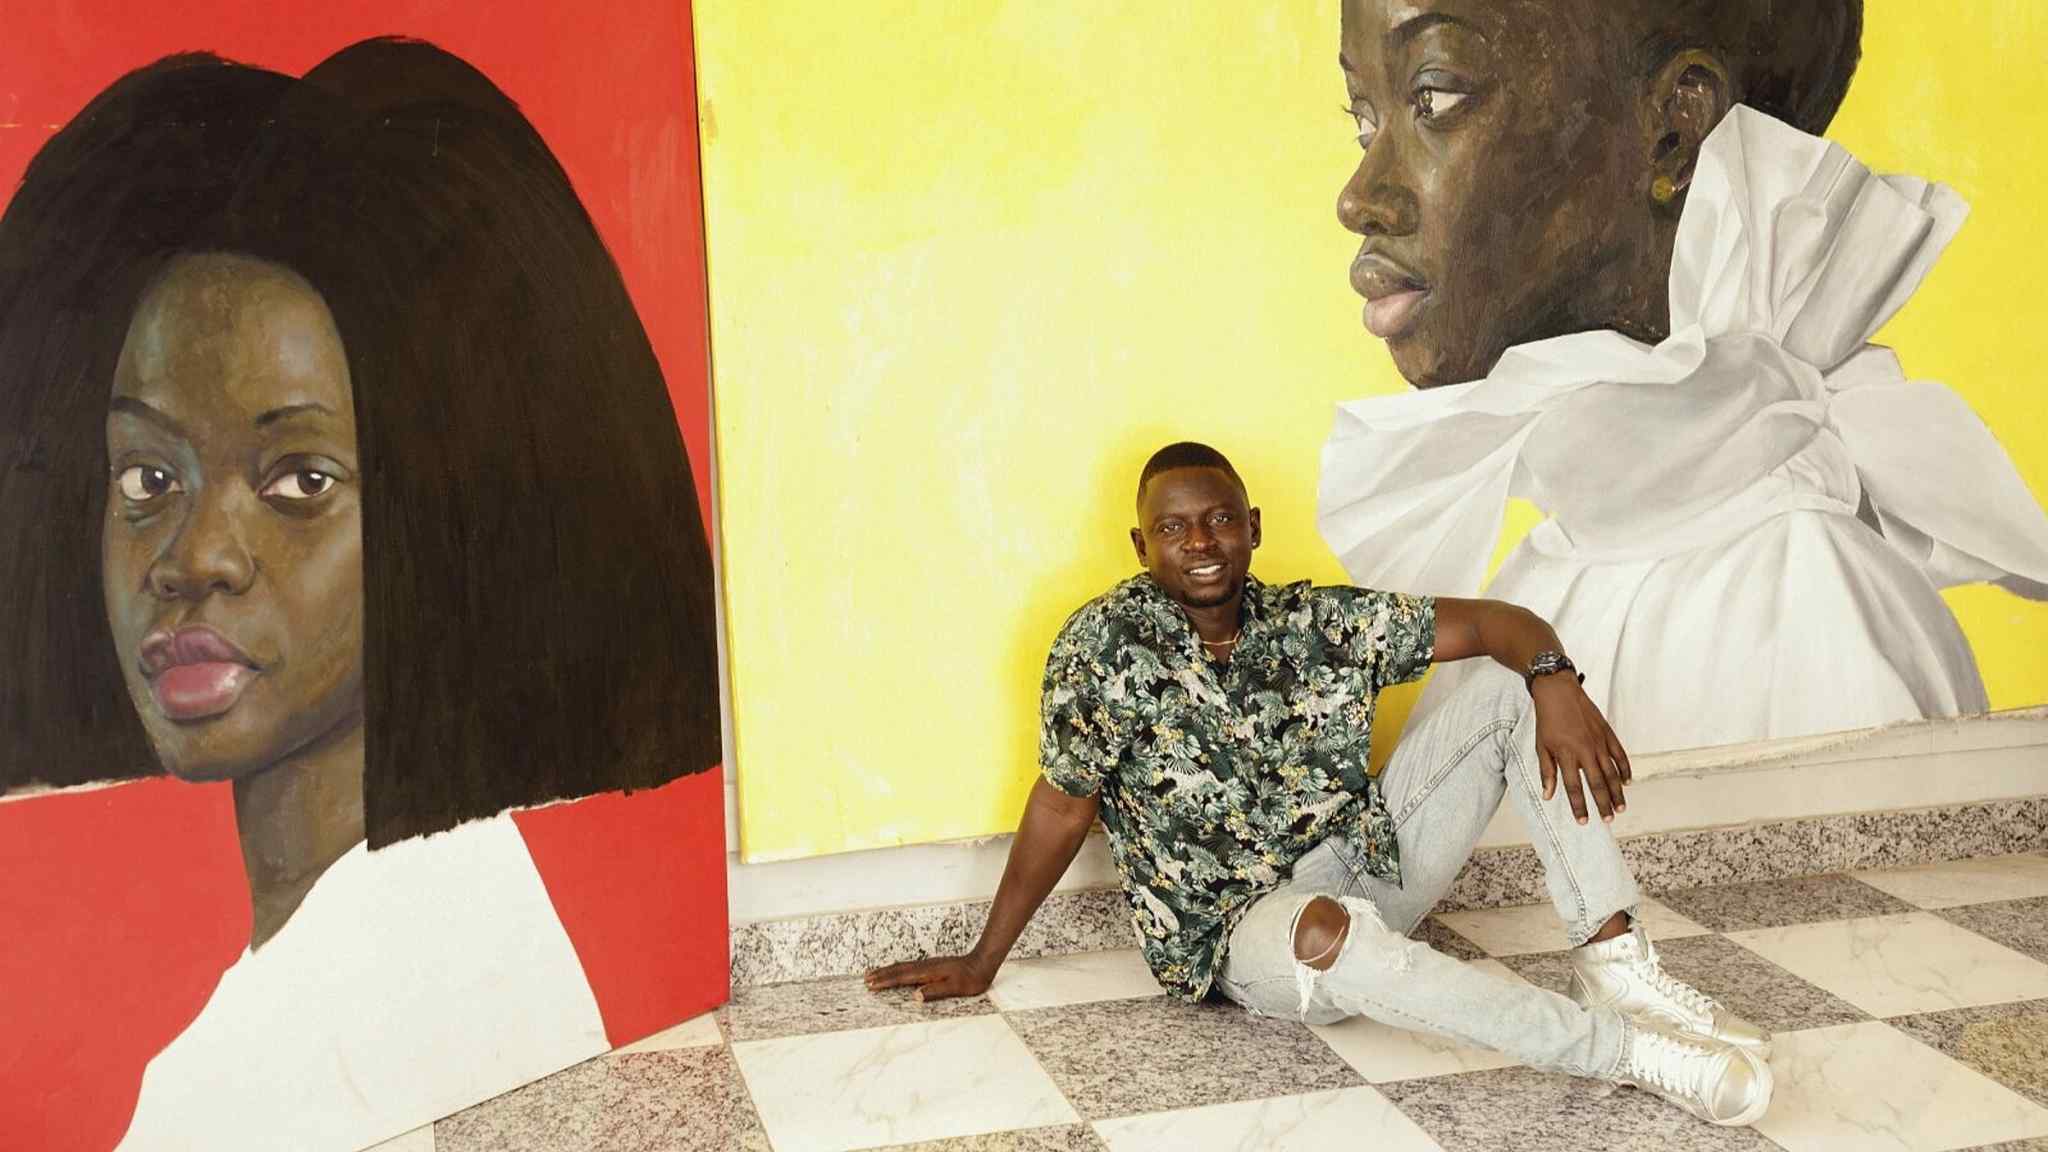 Oluwole Omofemi’s rapid rise to Nigerian art royalty